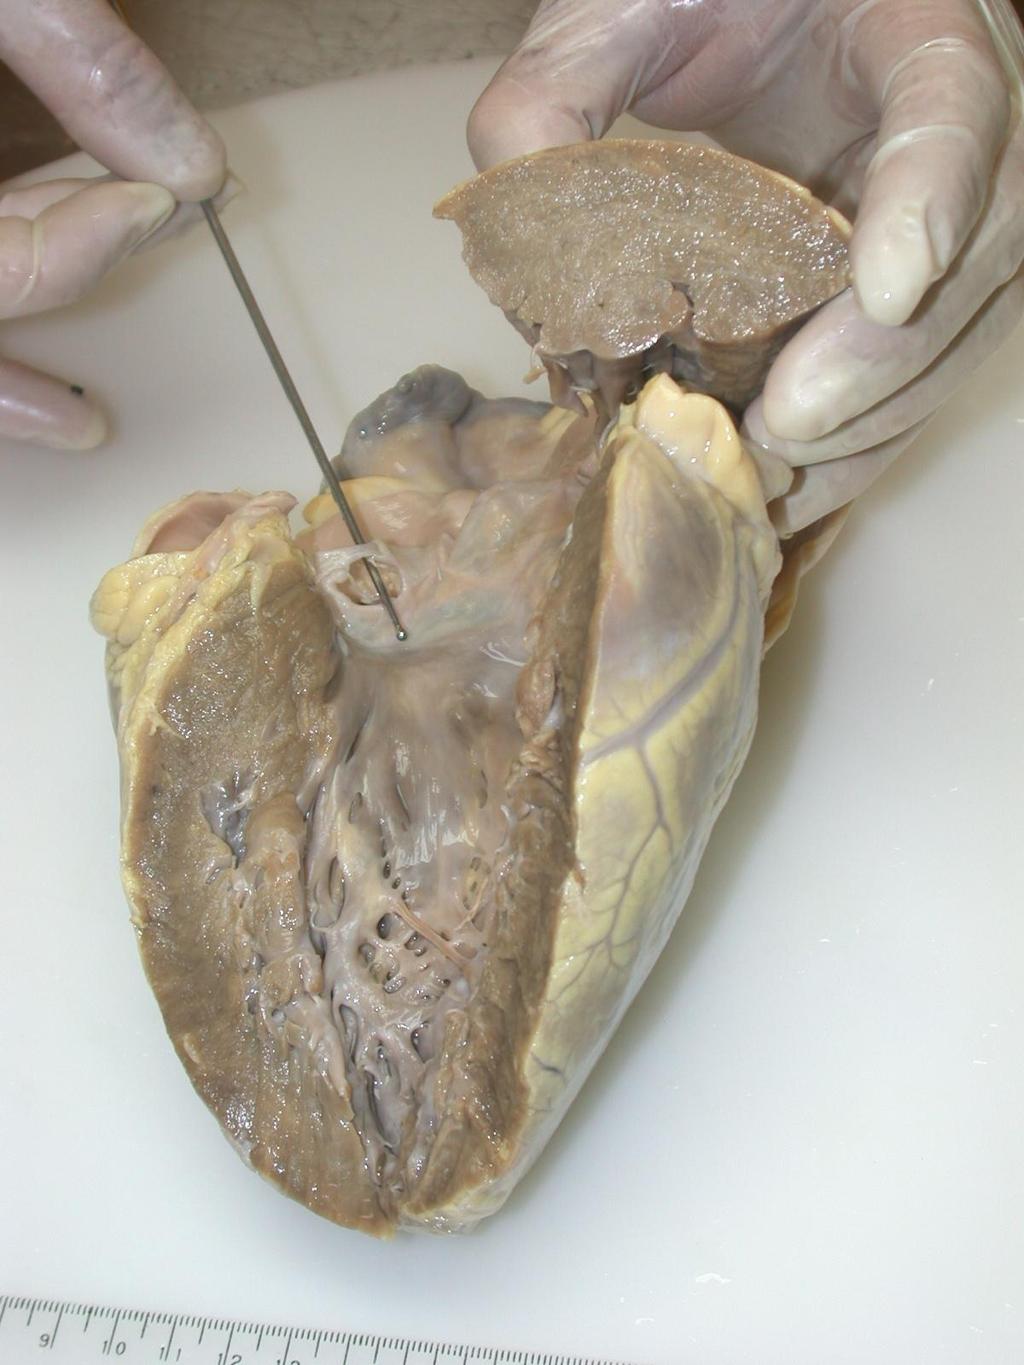 Az aorta billentyű vitiumainak ritka formája: valvula fenestrata.